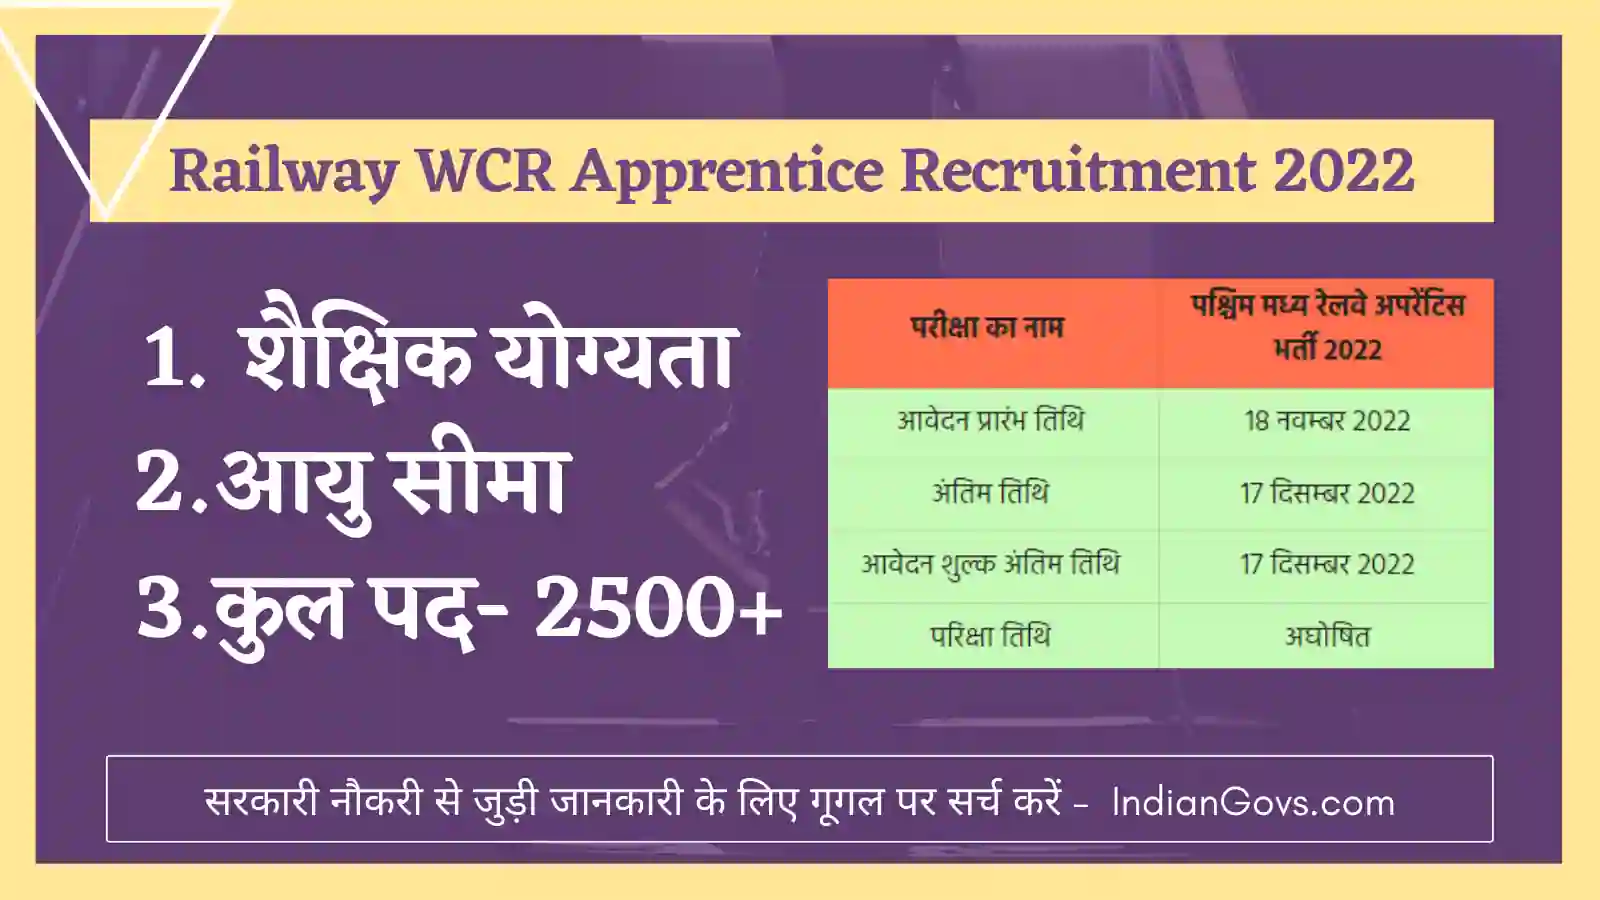 Railway WCR Apprentice Recruitment 2022 